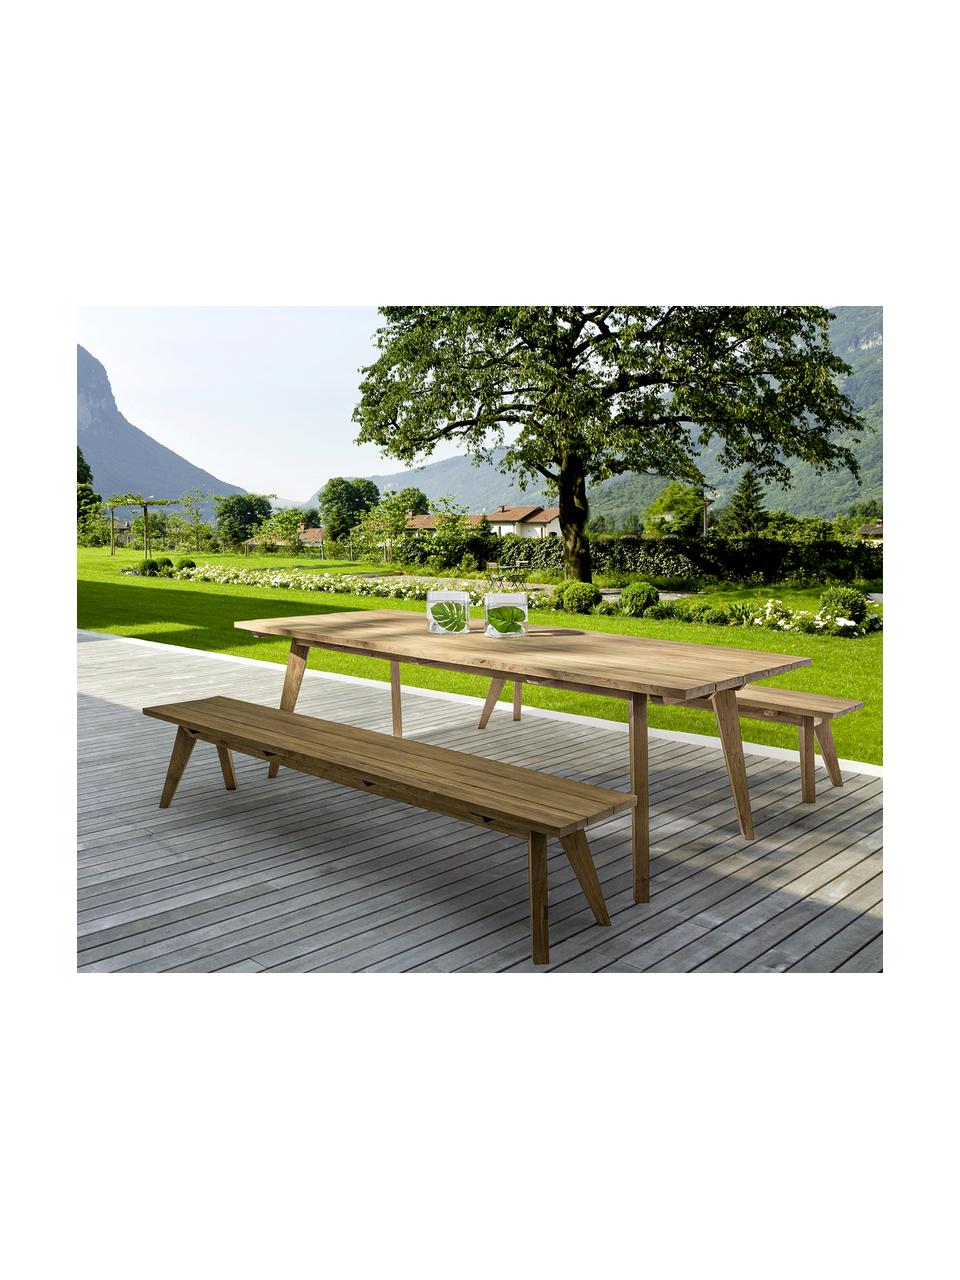 Gartentisch Kendari, 260 x 100 cm, Recyceltes, unbehandeltes Teakholz
FSC-Zertifiziert, Teak, B 260 x T 100 cm